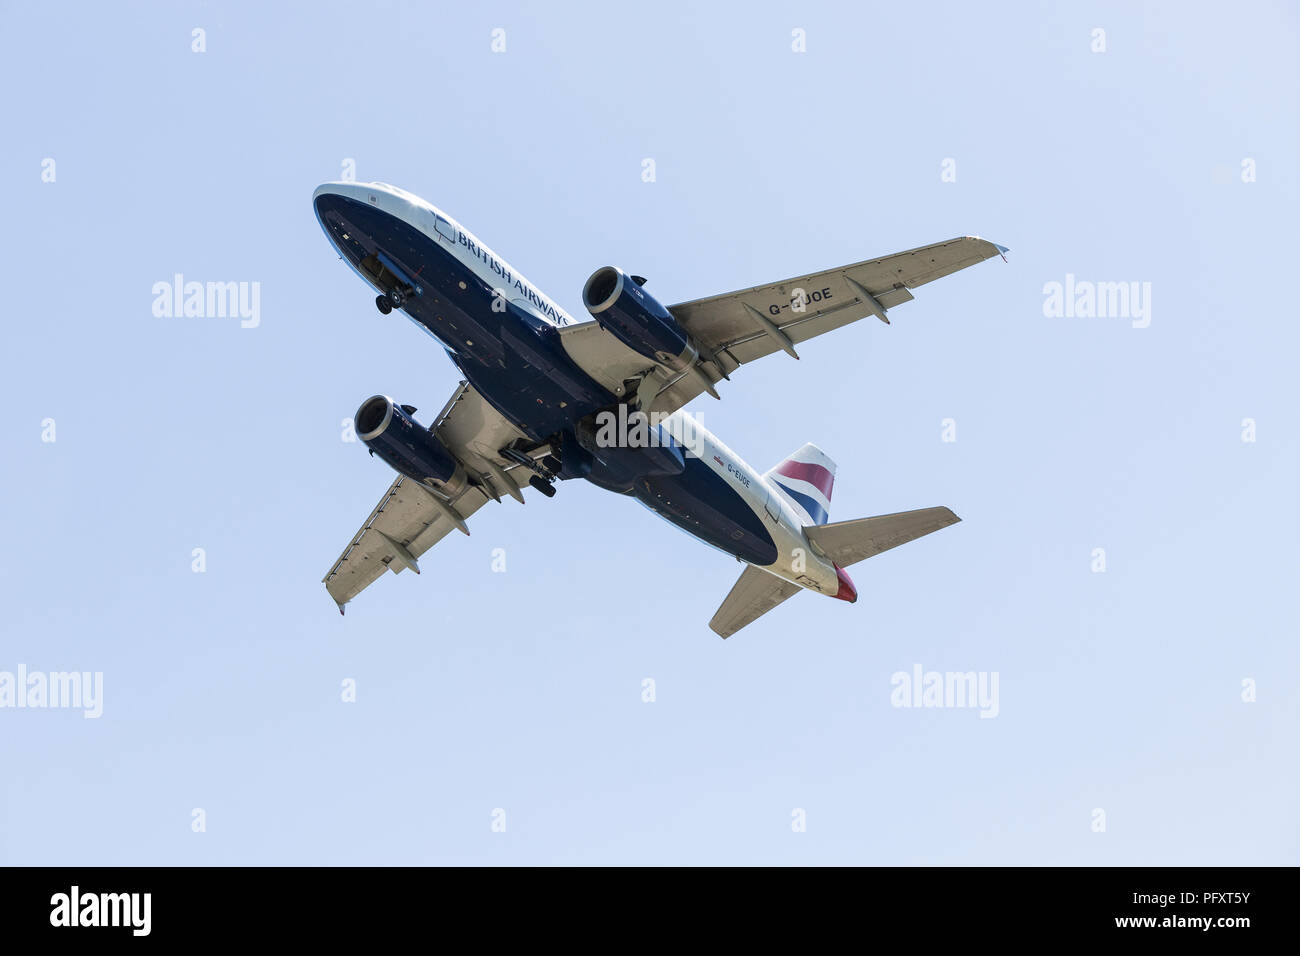 21-07-2013 British Airways avion. Un Airbus A319-131 G-EUOE. Banque D'Images